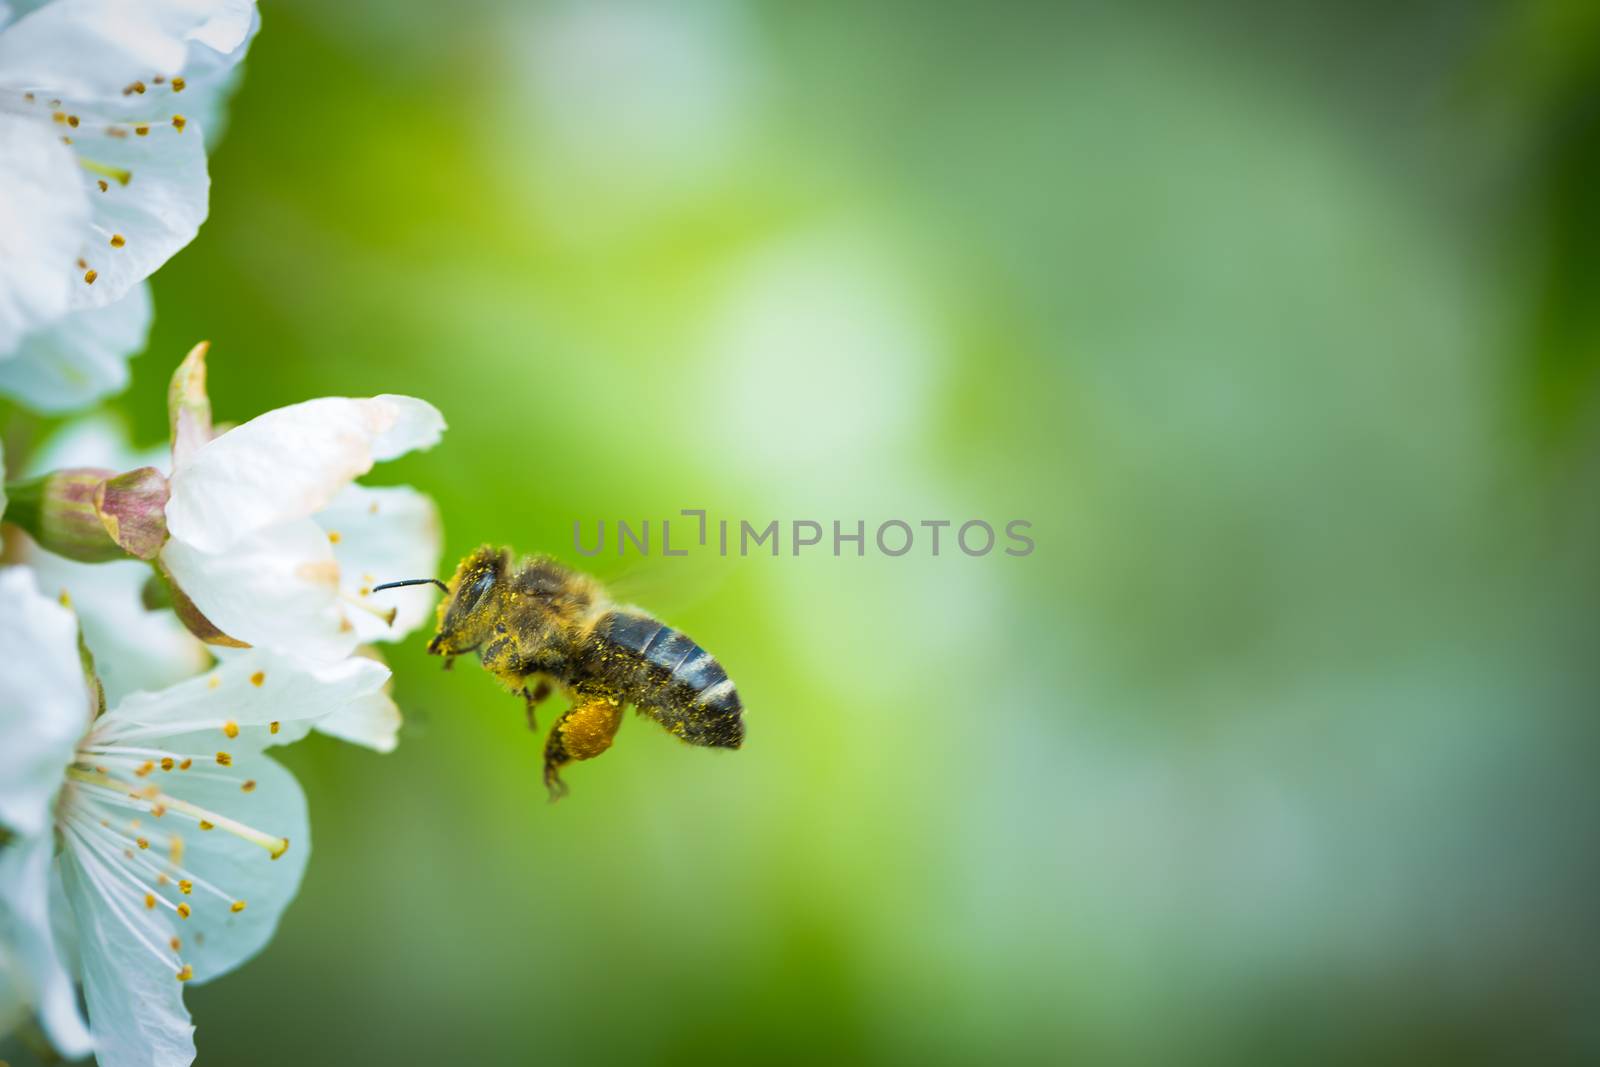 Honey bee in flight approaching blossoming cherry tree by viktor_cap